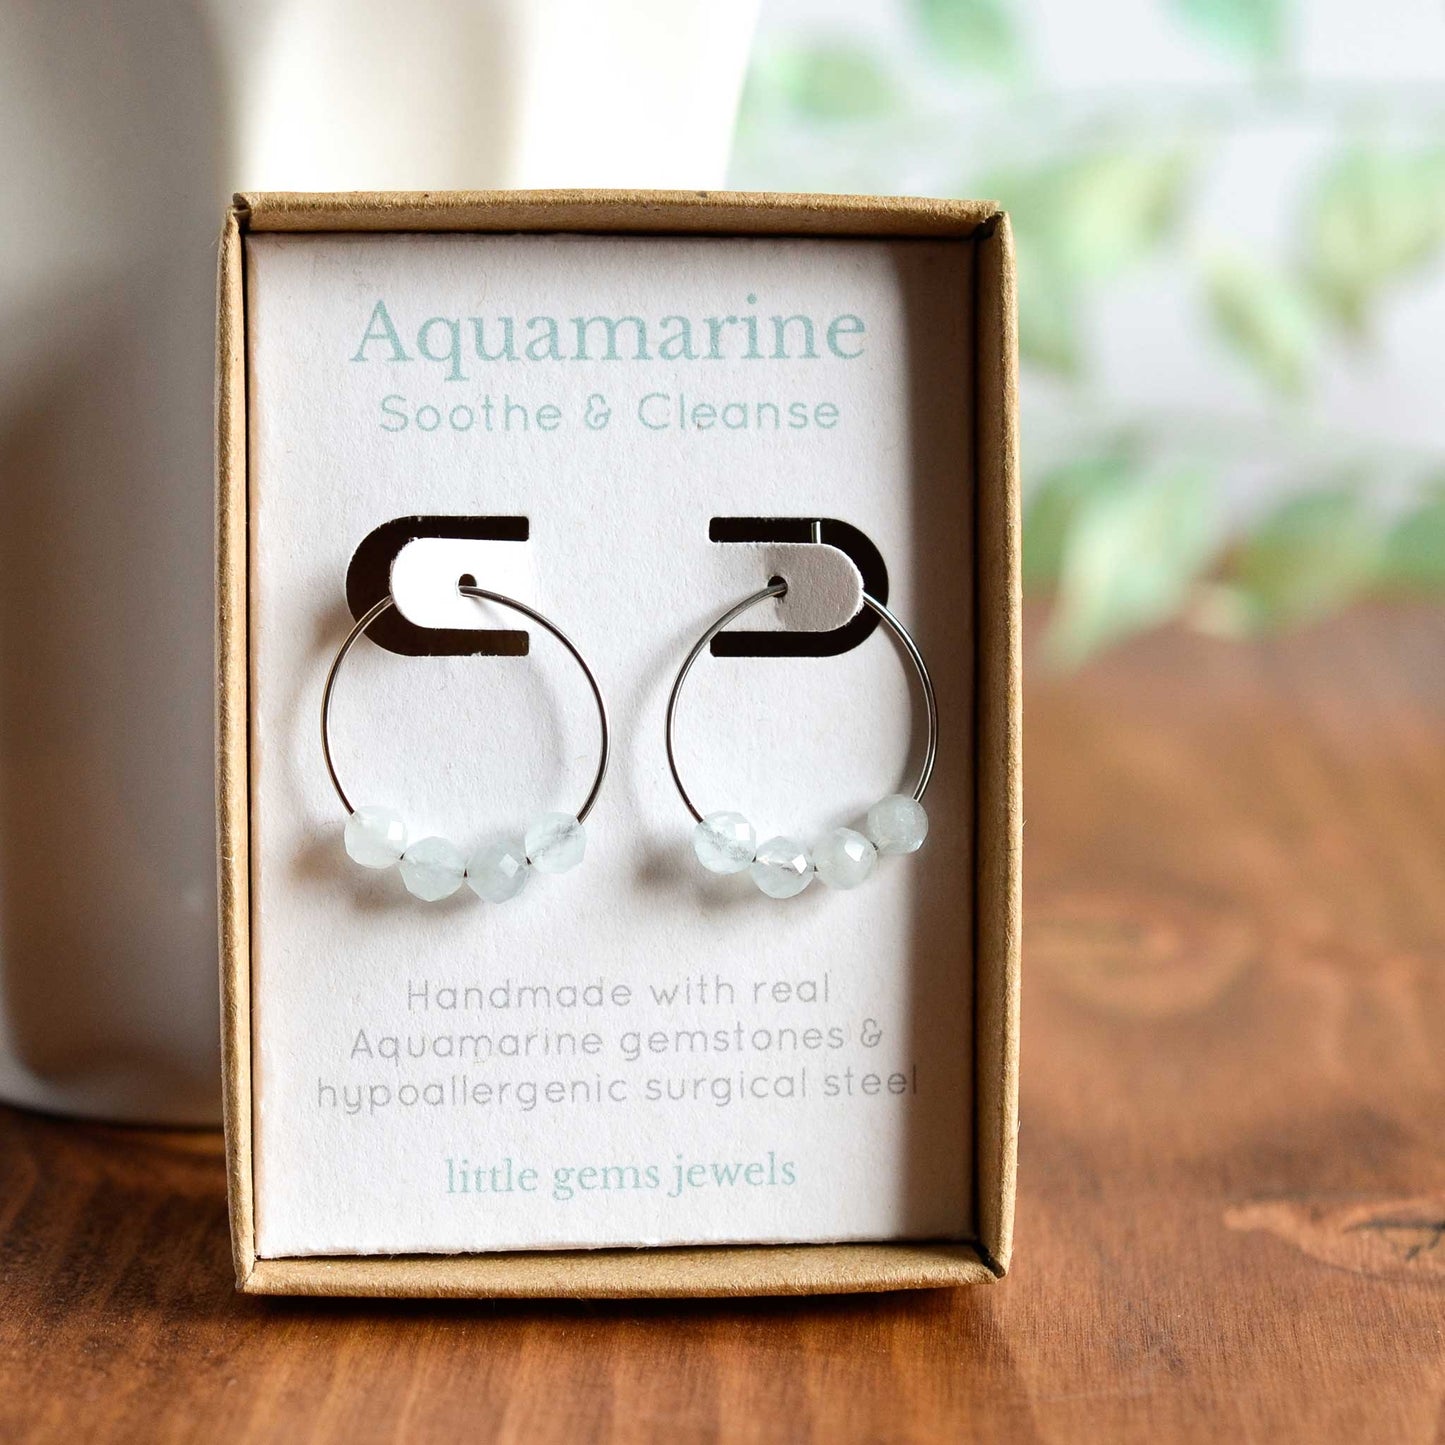 Aquamarine hoop earrings in eco friendly gift box